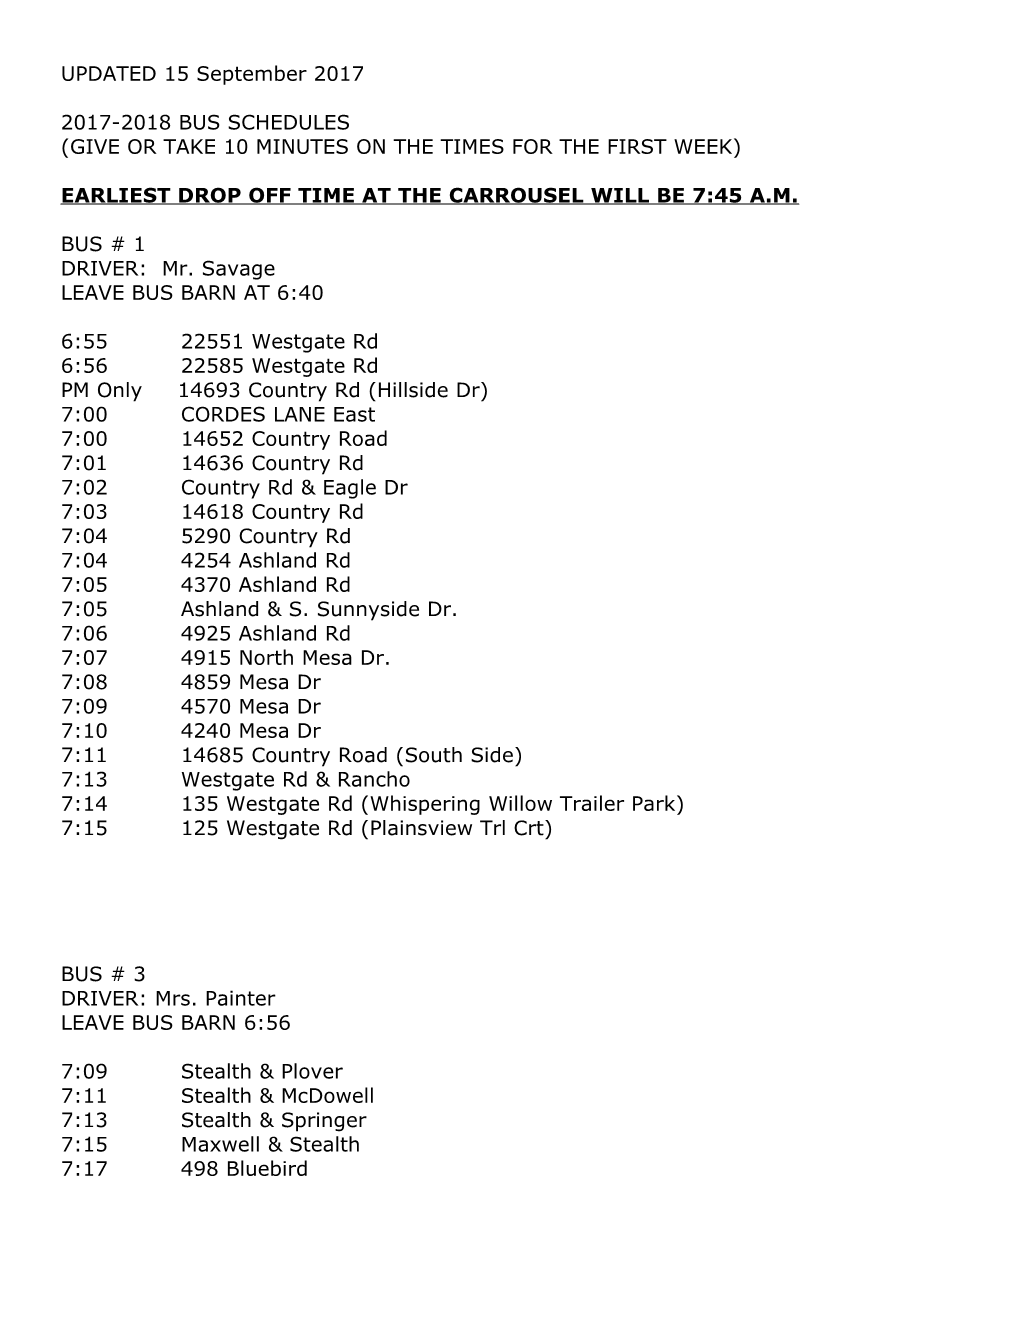 Tentative 2003-2004 Bus Schedules